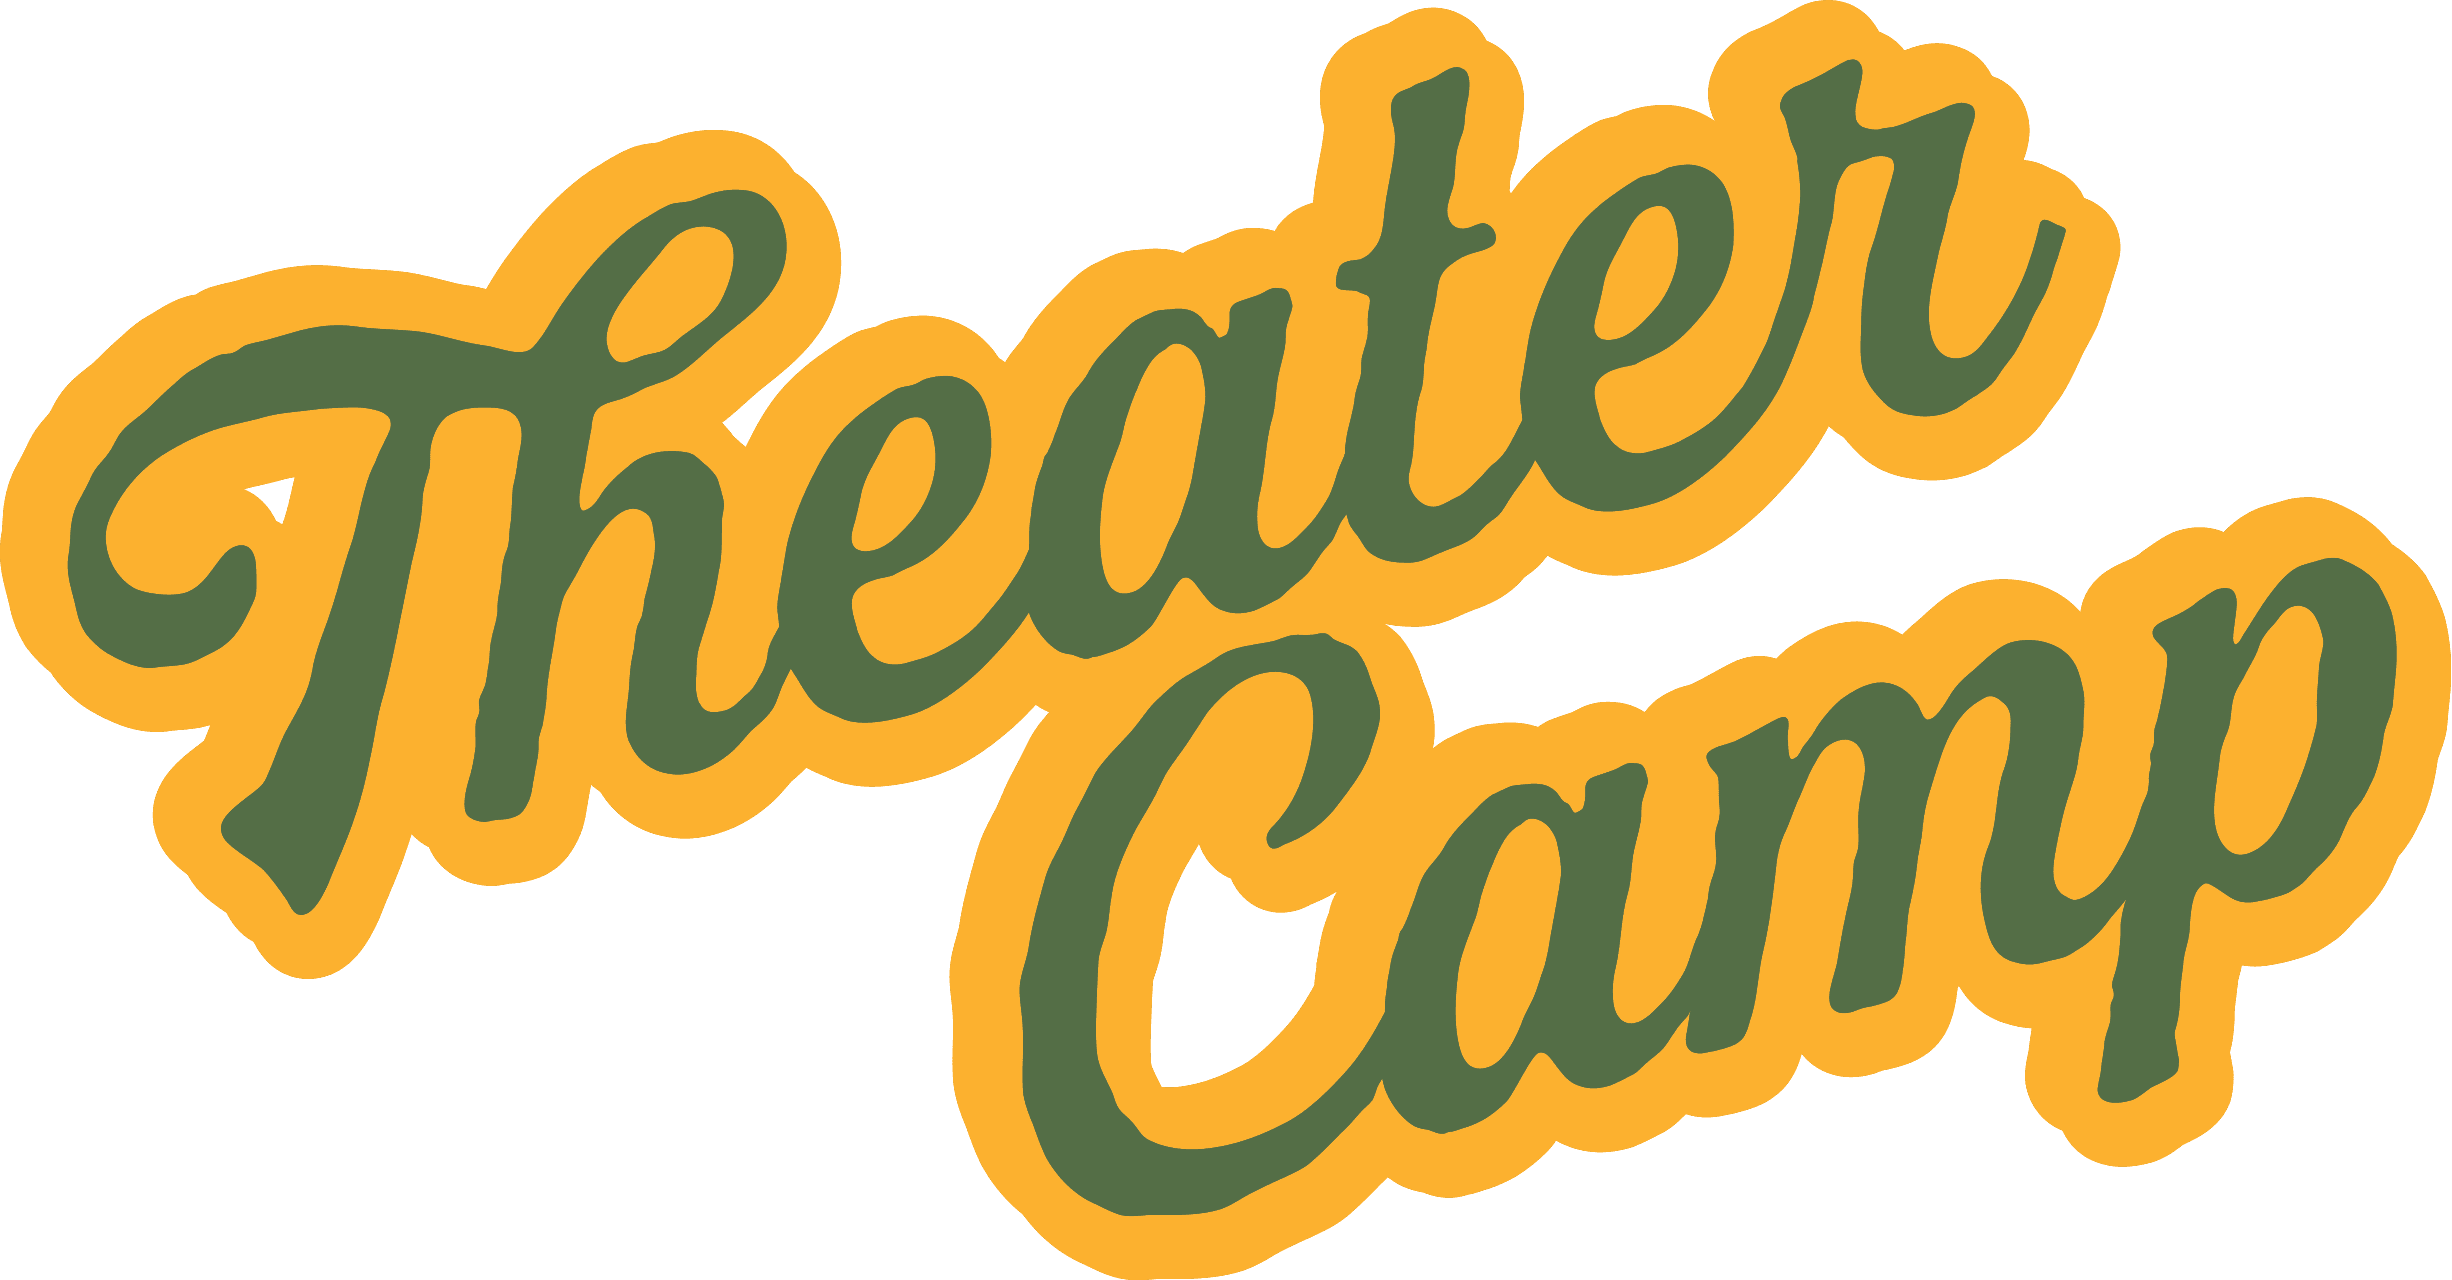 Theater Camp logo